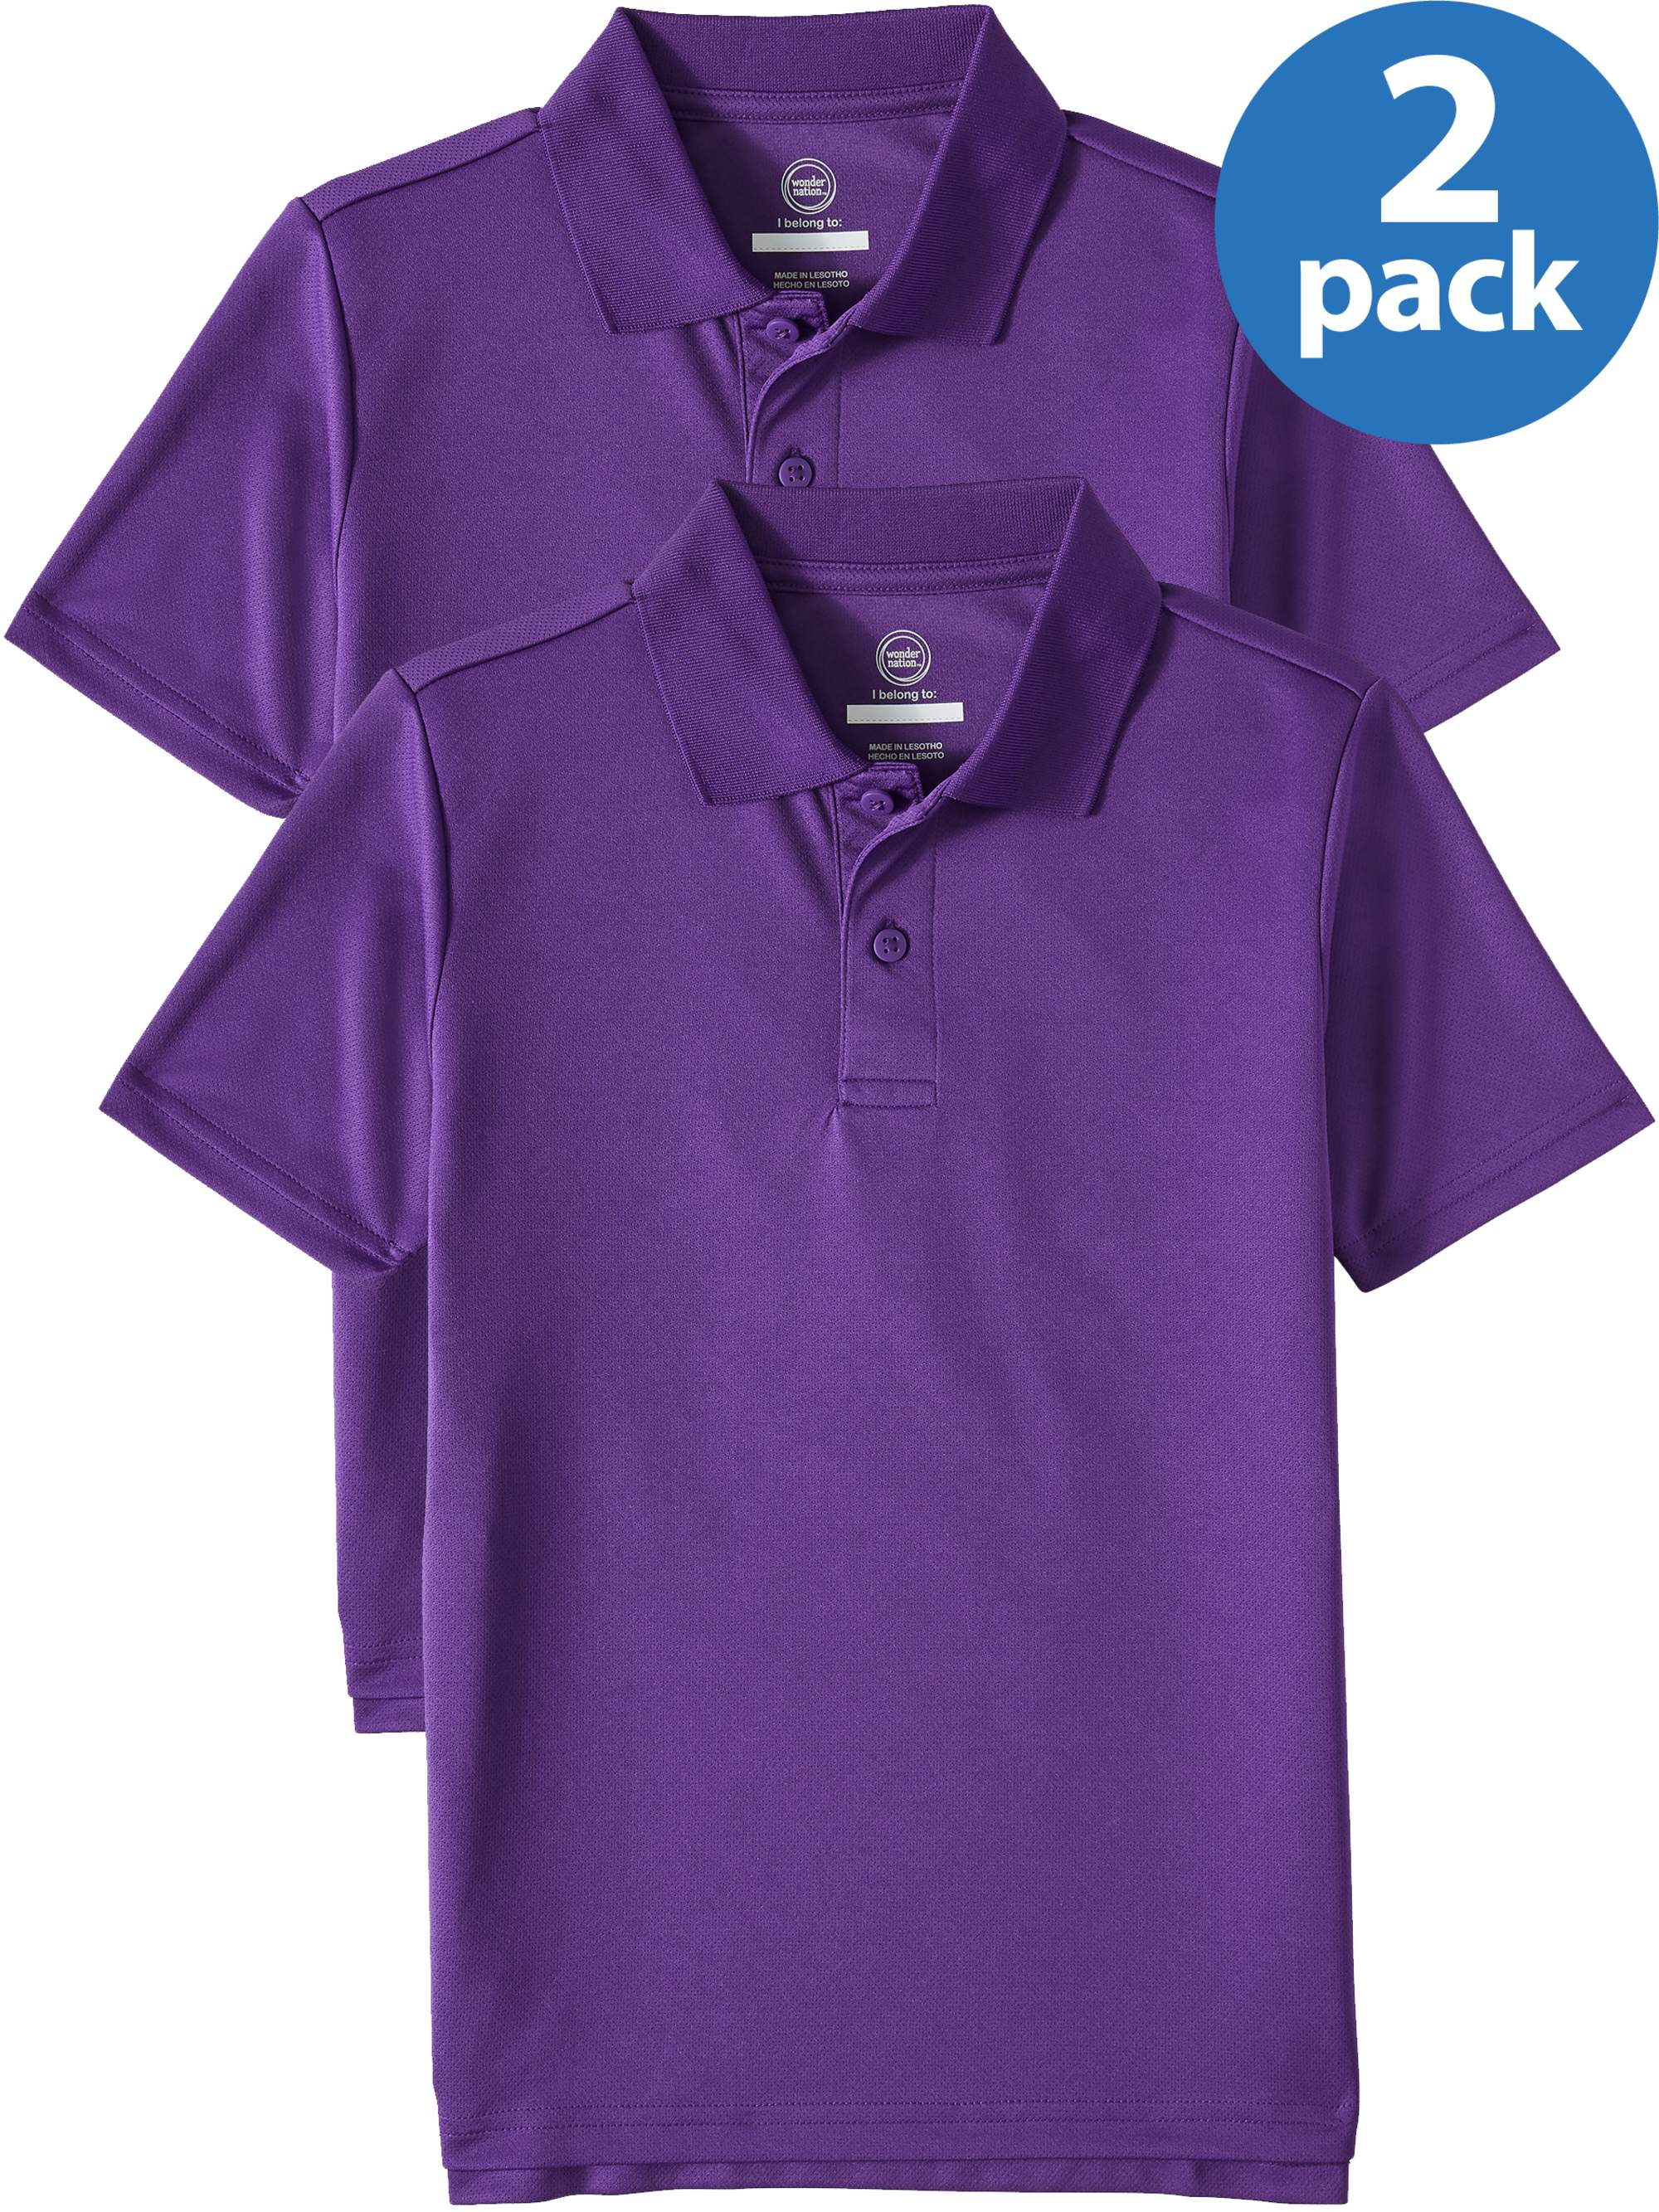 Short Sleeve Cotton Polo T-Shirt Cherokee Boys School Uniform 2 Pack